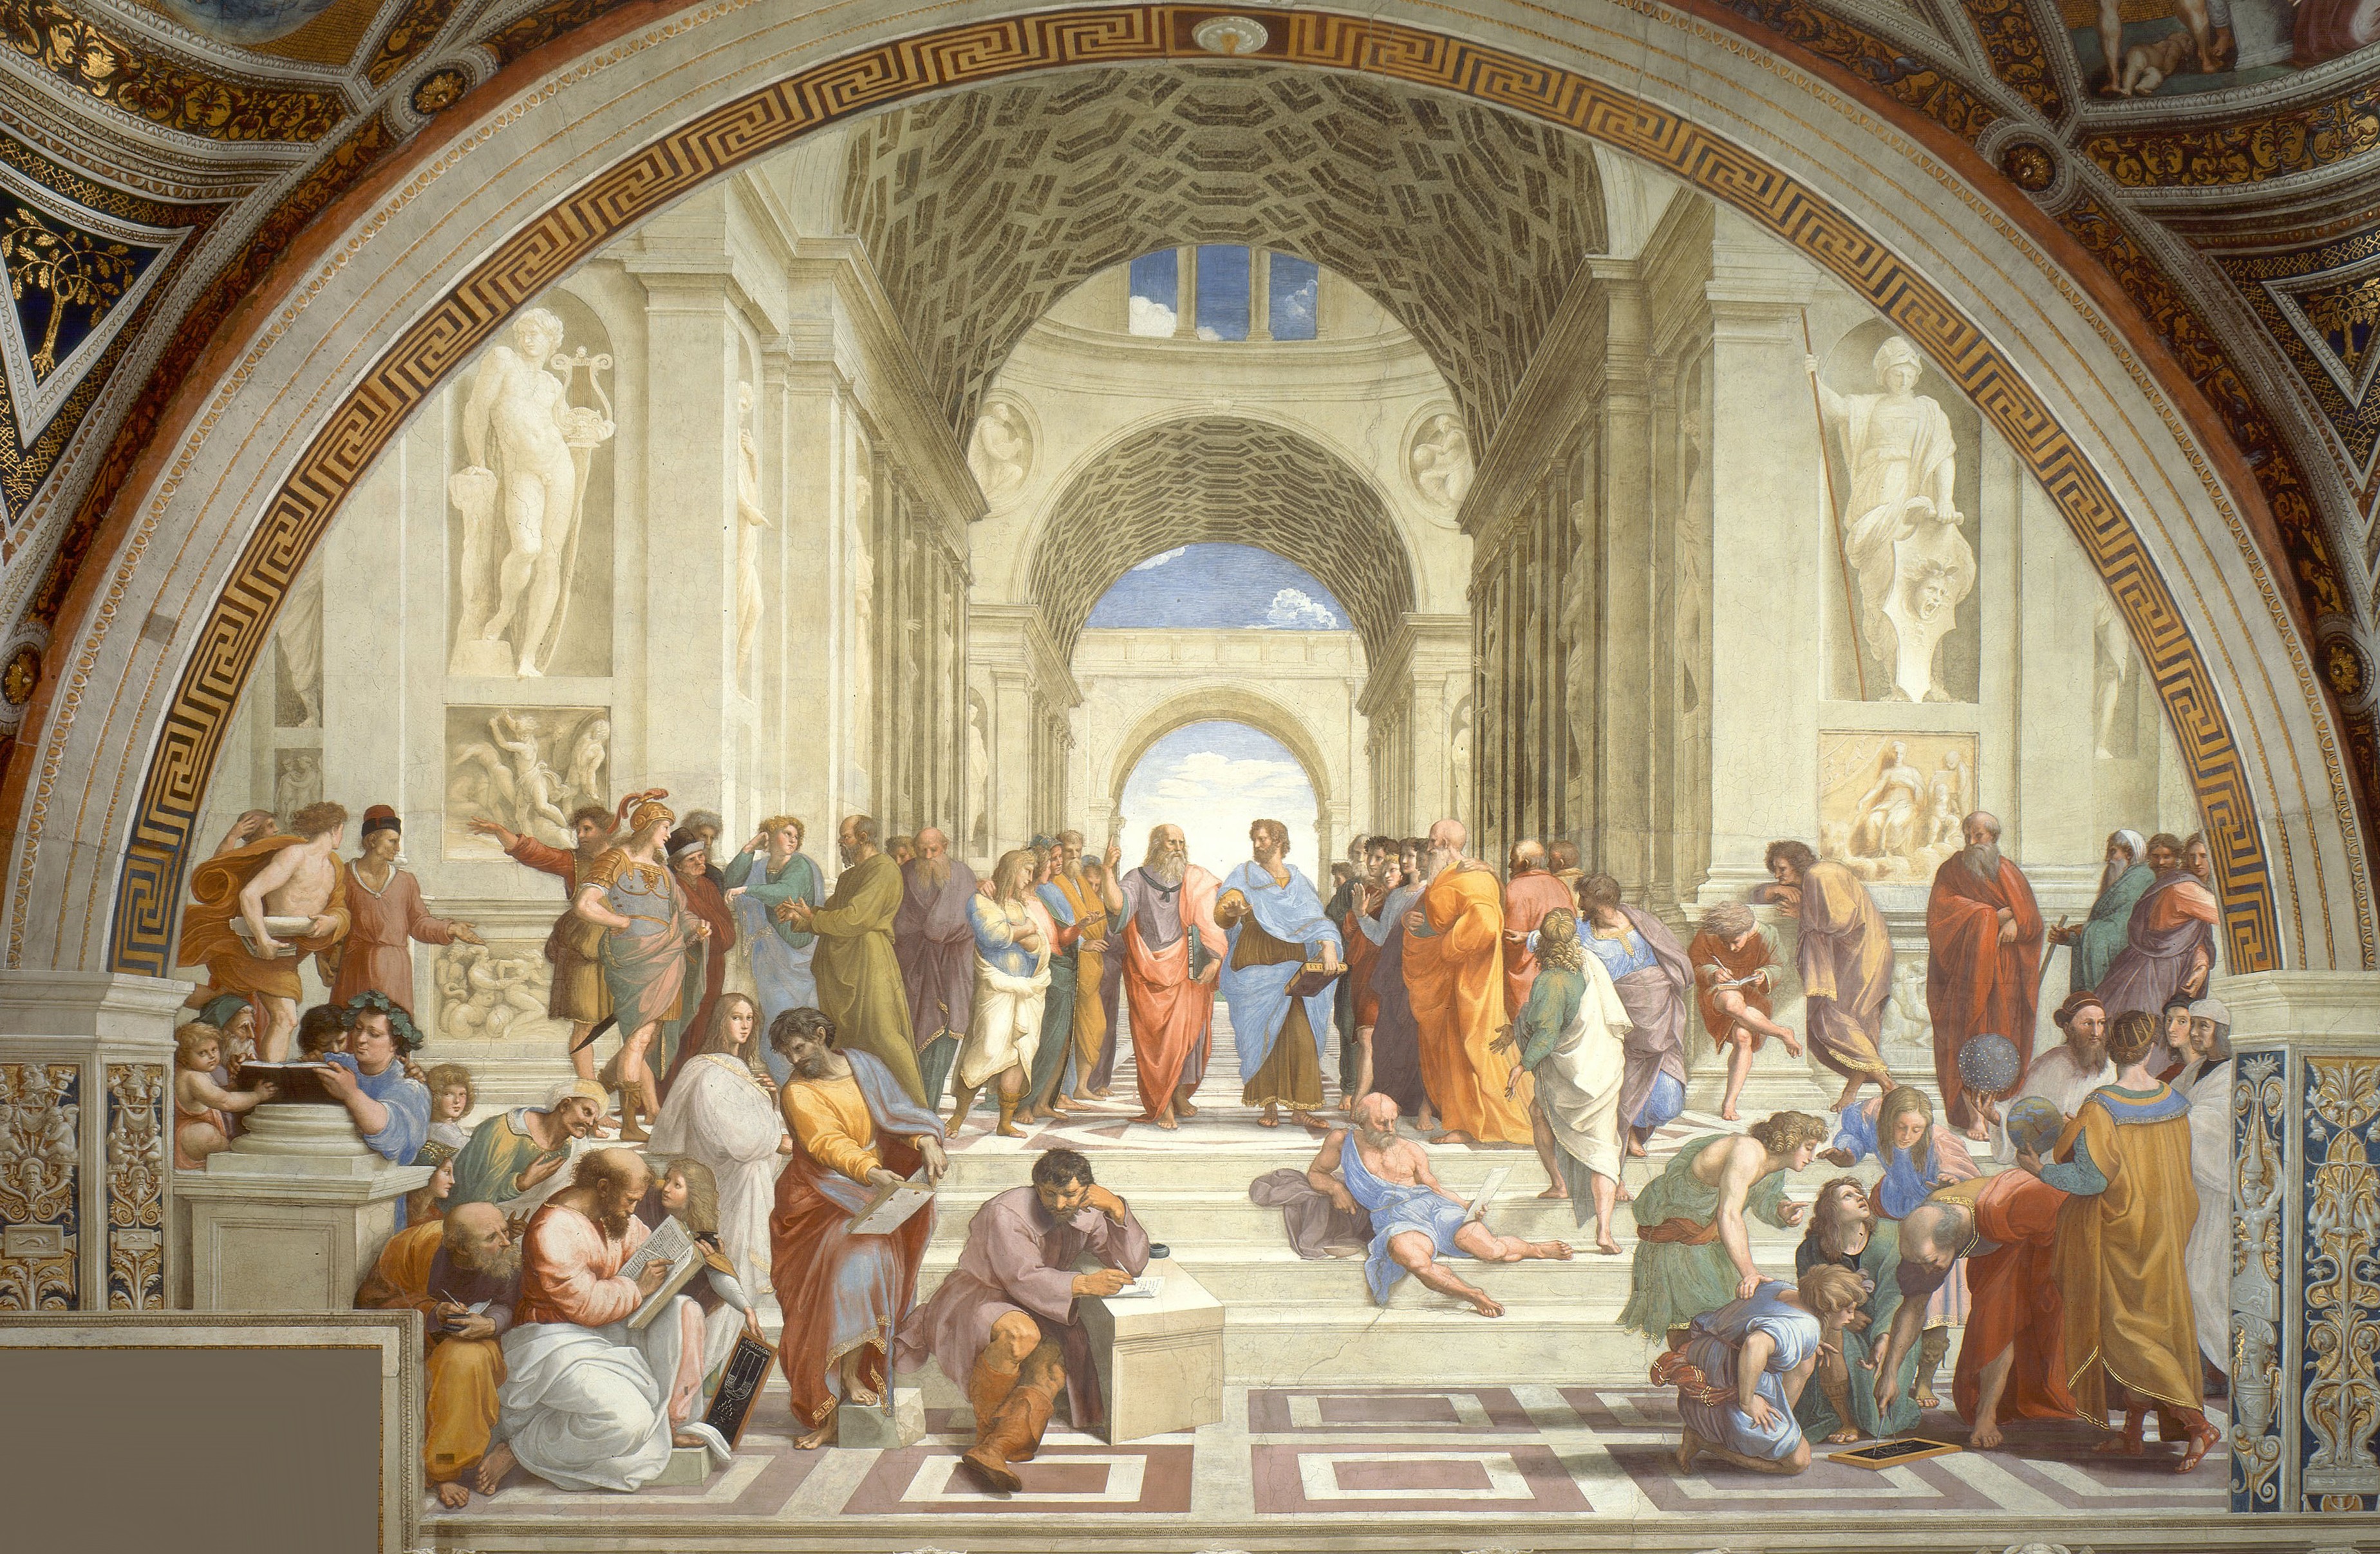 Raphael's "School of Athens".